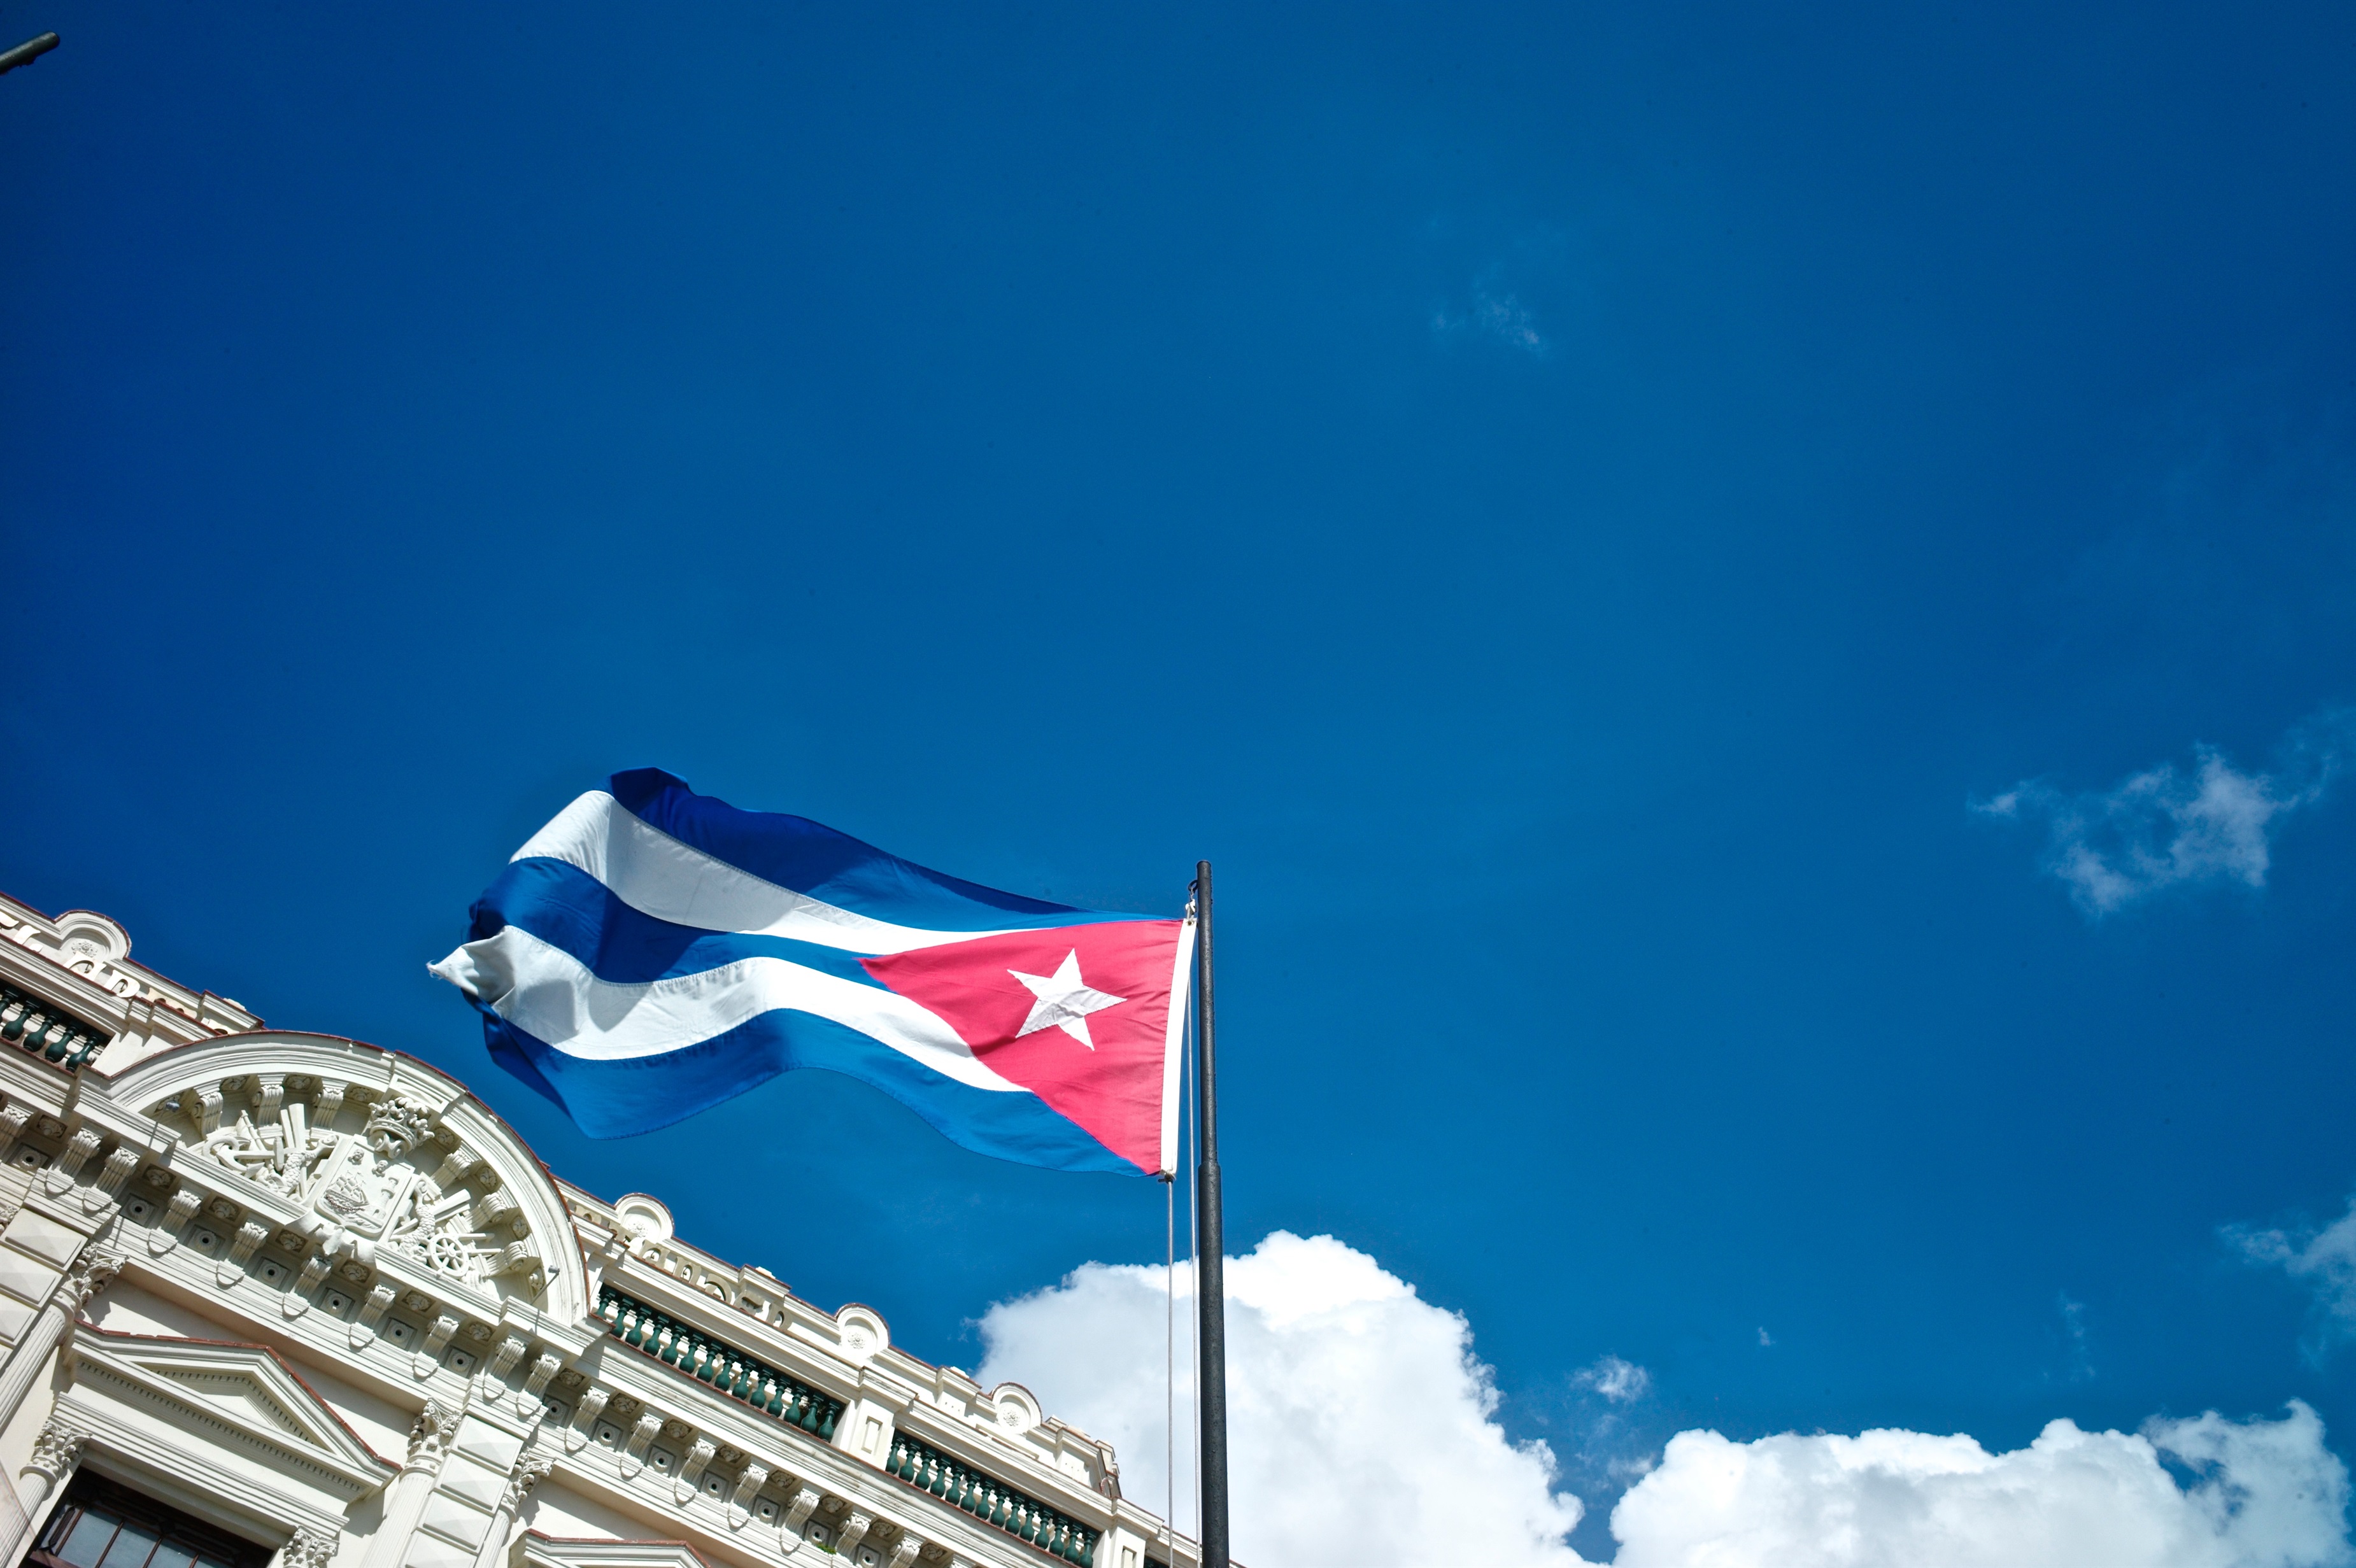 Cuba desarrolla 4 vacunas contra COVID-19 -
KIKE CALVO / ZUMA PRESS / CONTACTOPHOTO
